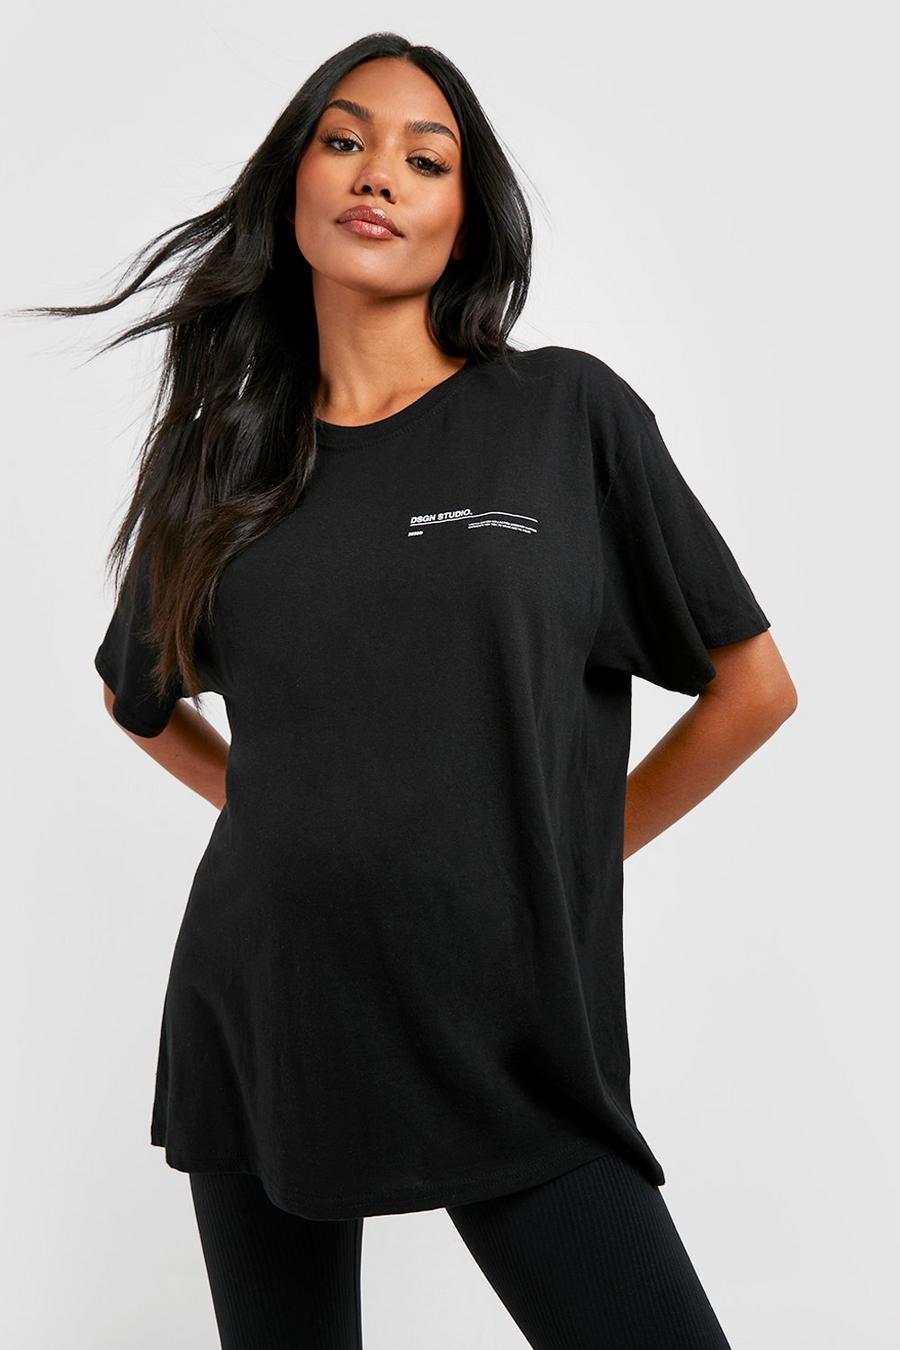 Camiseta Premamá oversize con estampado Dsgn Studio, Black image number 1